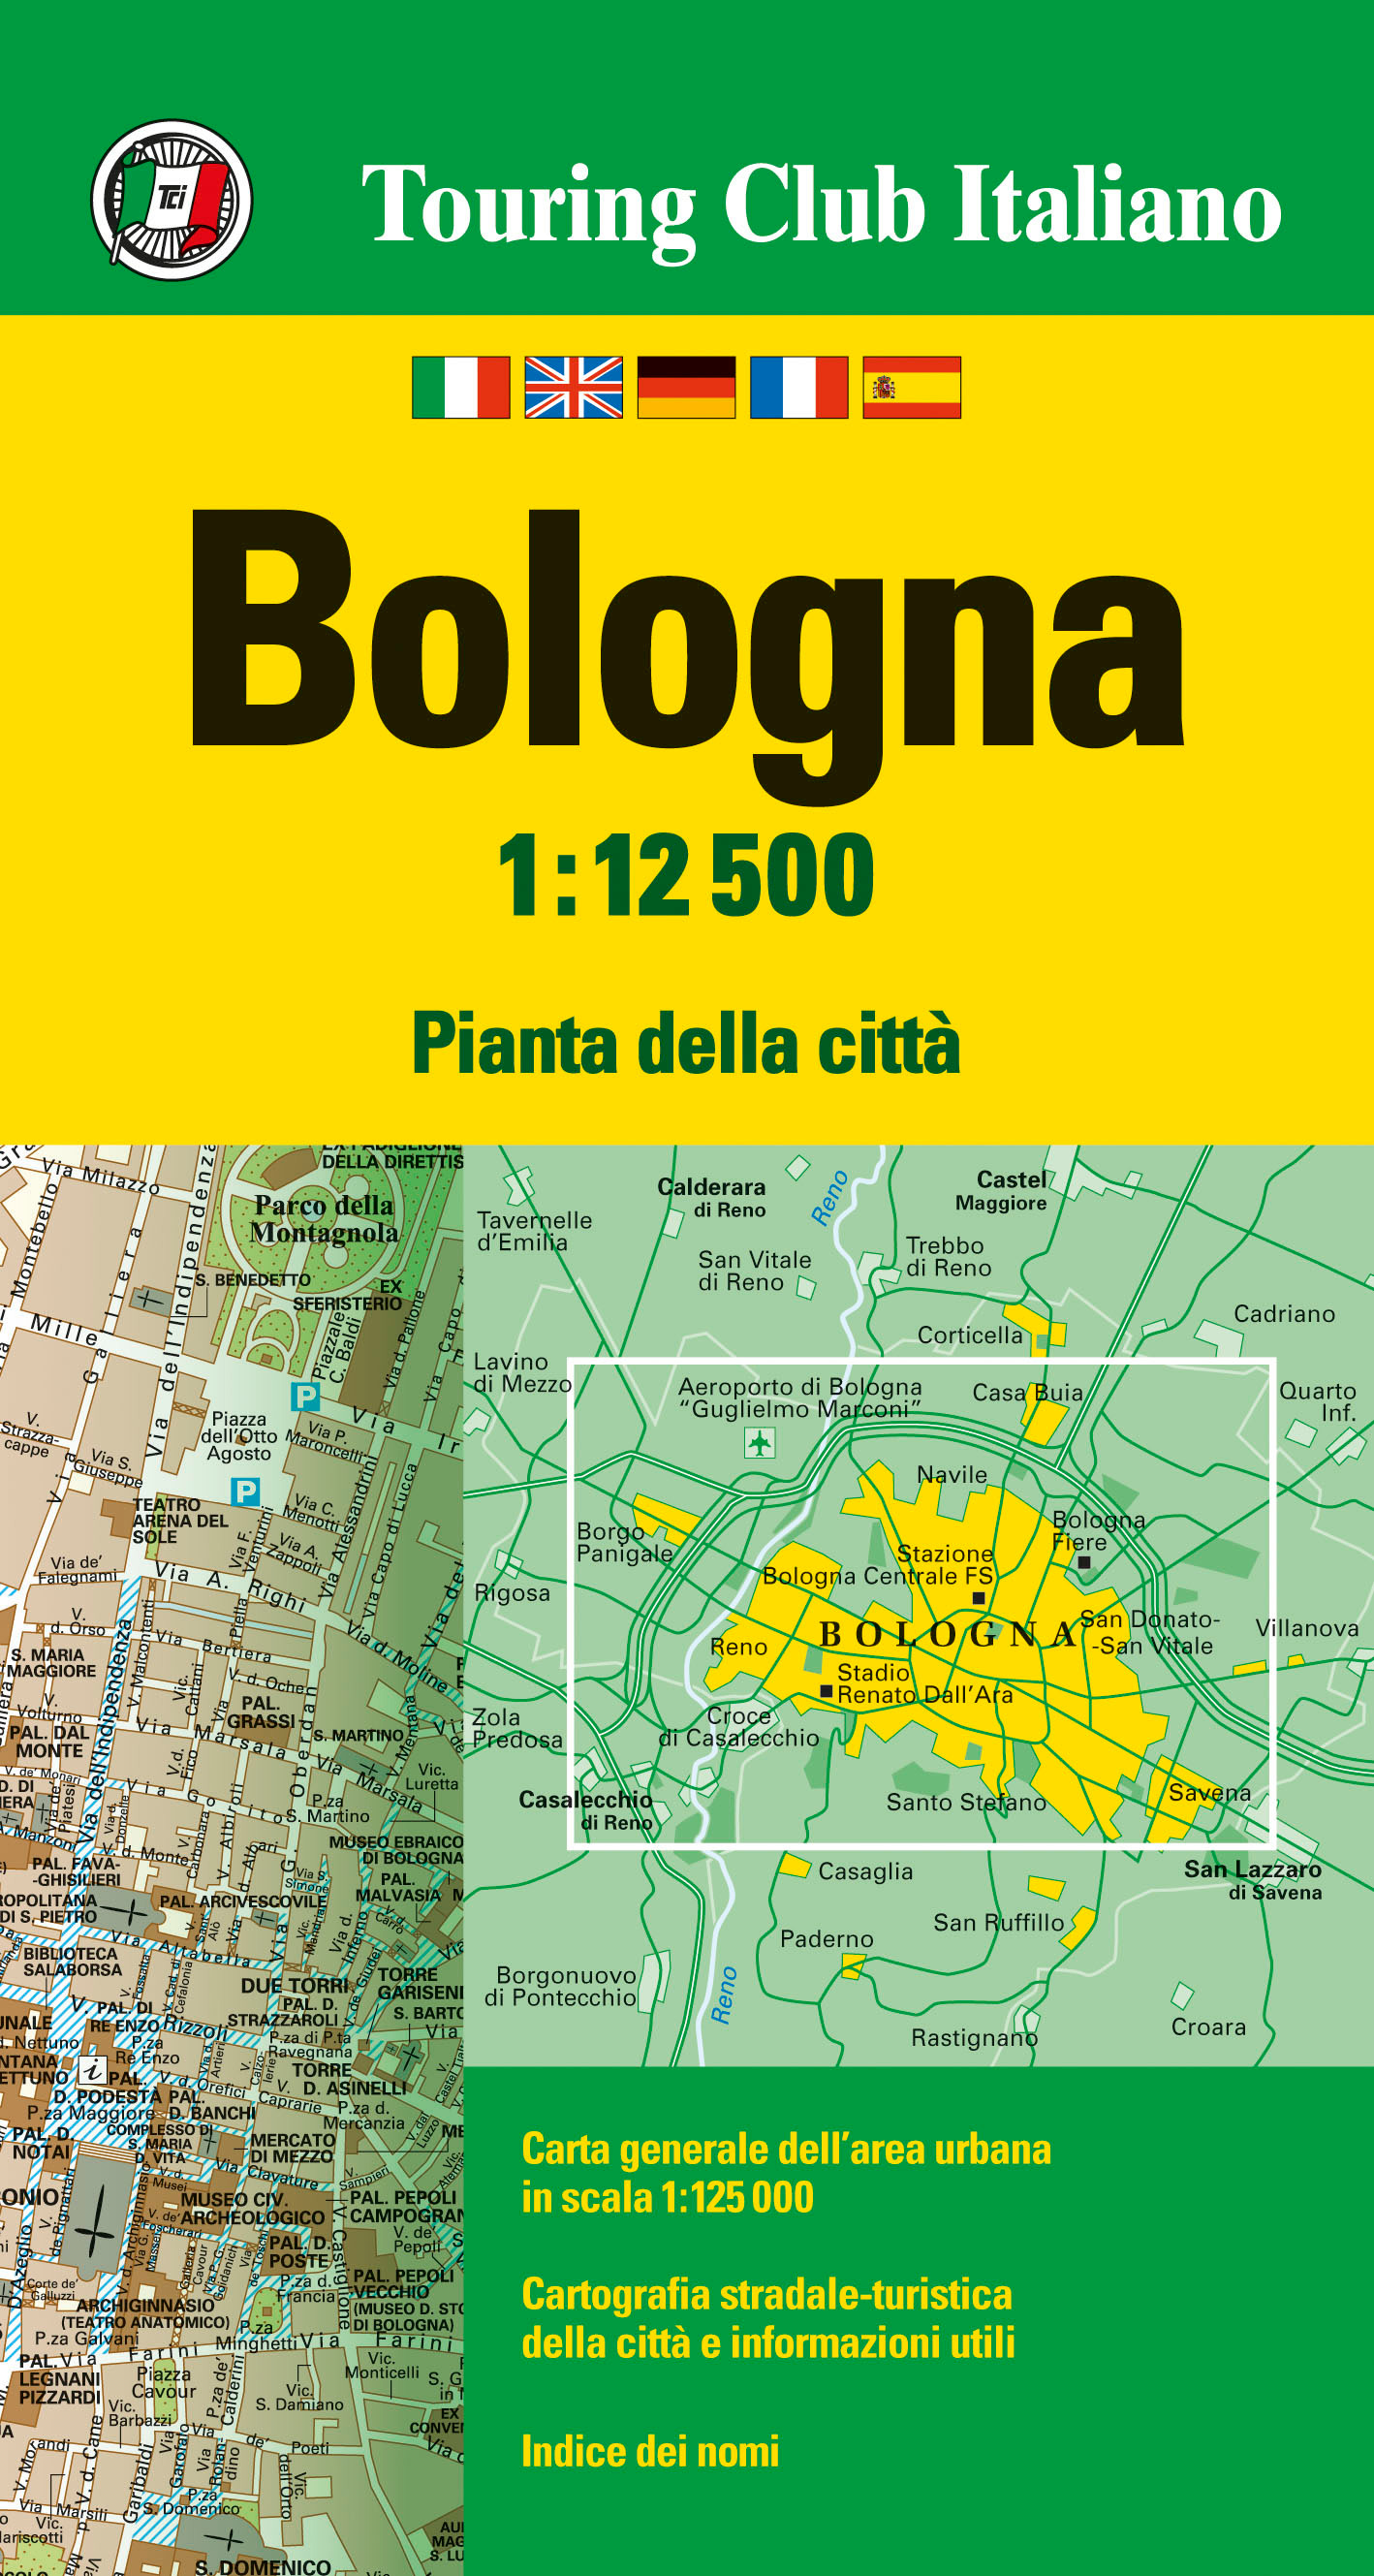 Stadsplattegrond Bologna | Touring Club Italiano de zwerver